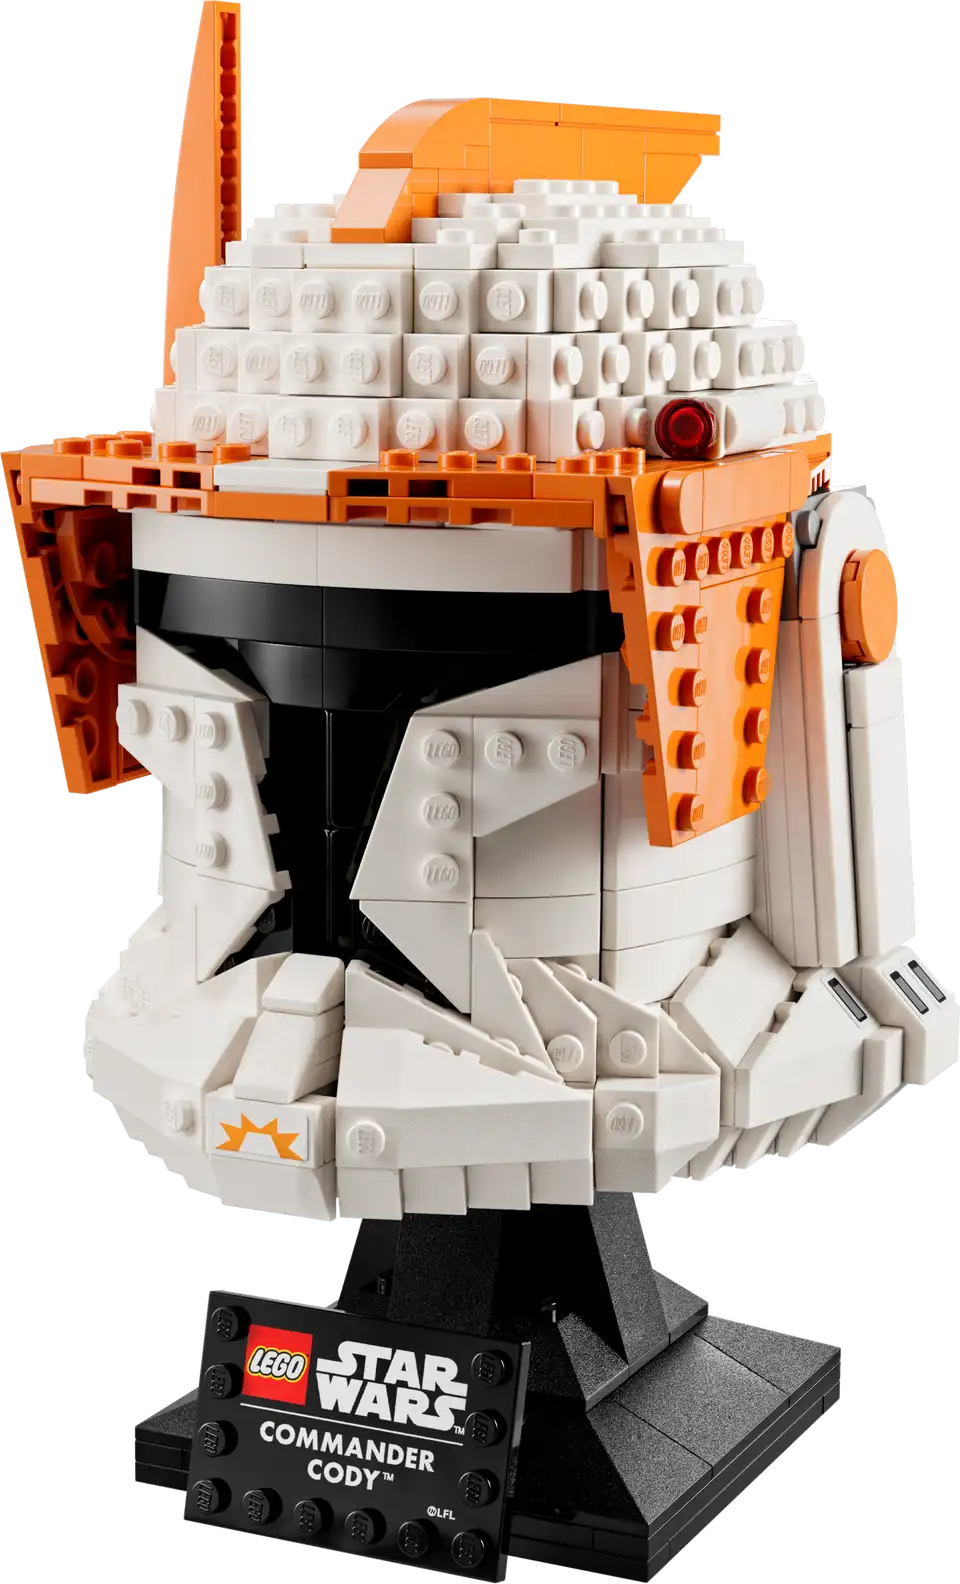 Clone Commander Cody Lego Helmet 75350